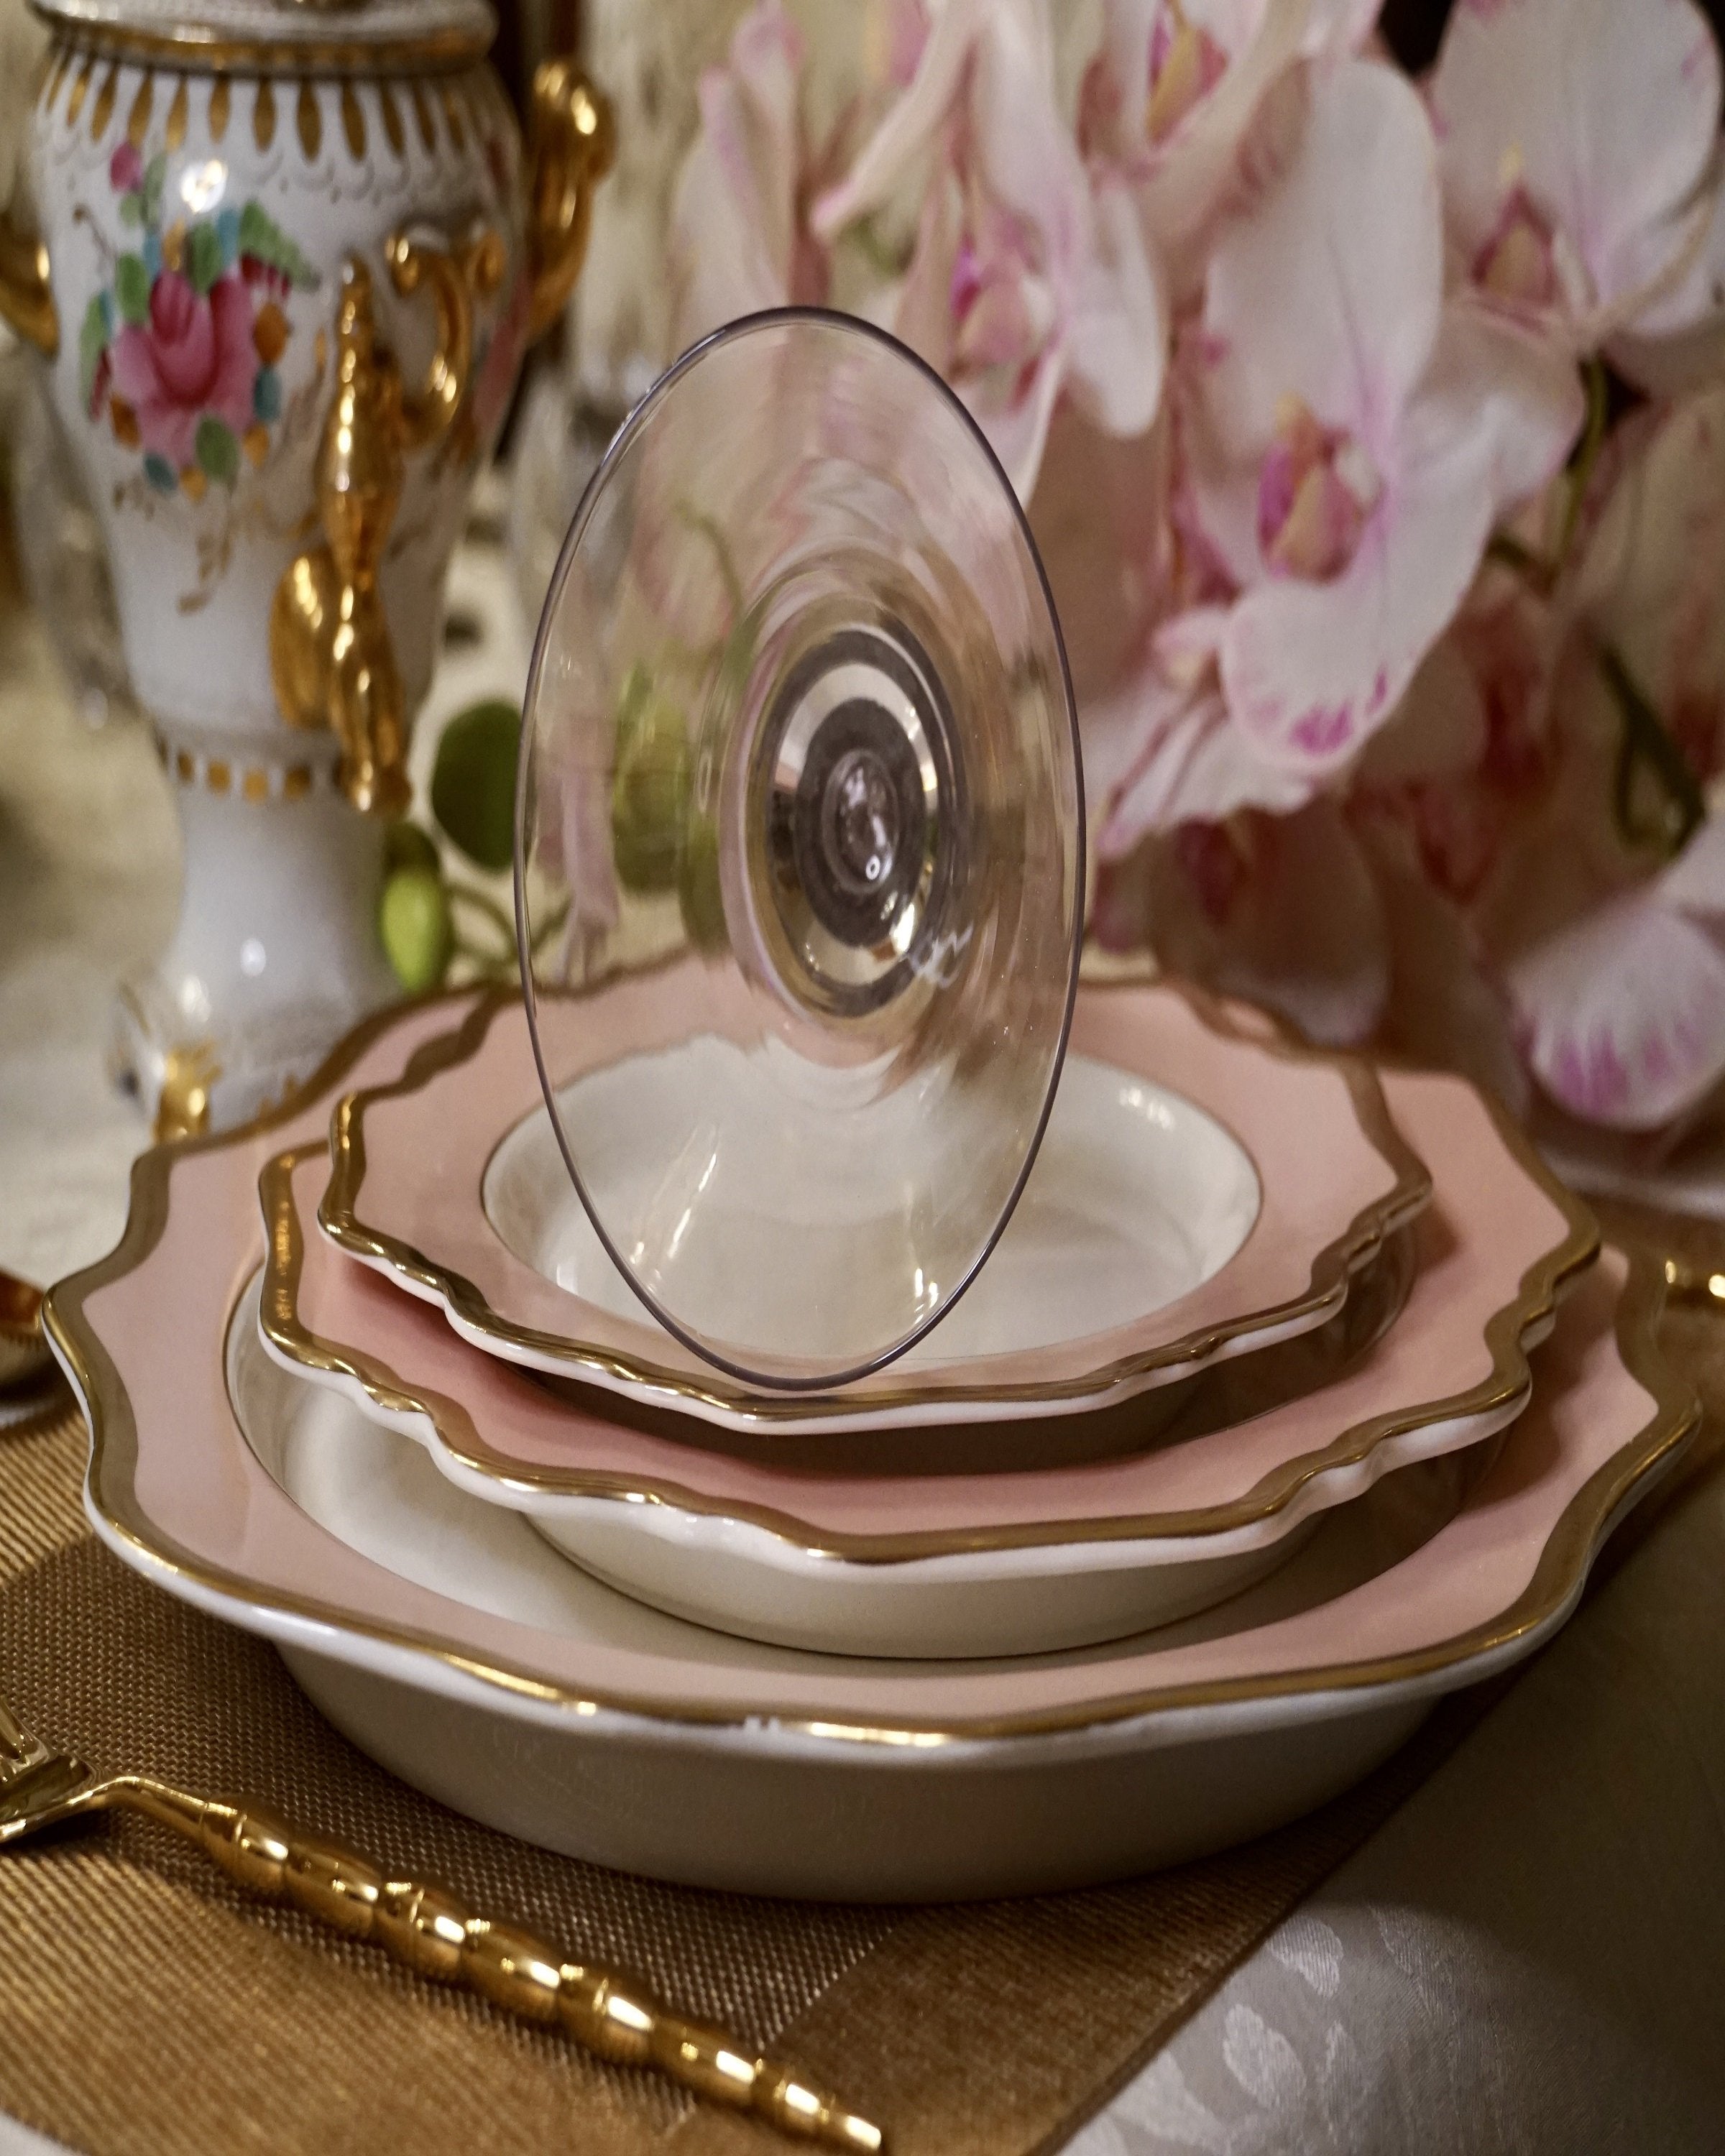 Pink Ceramic Dinner Plates Online Shopping